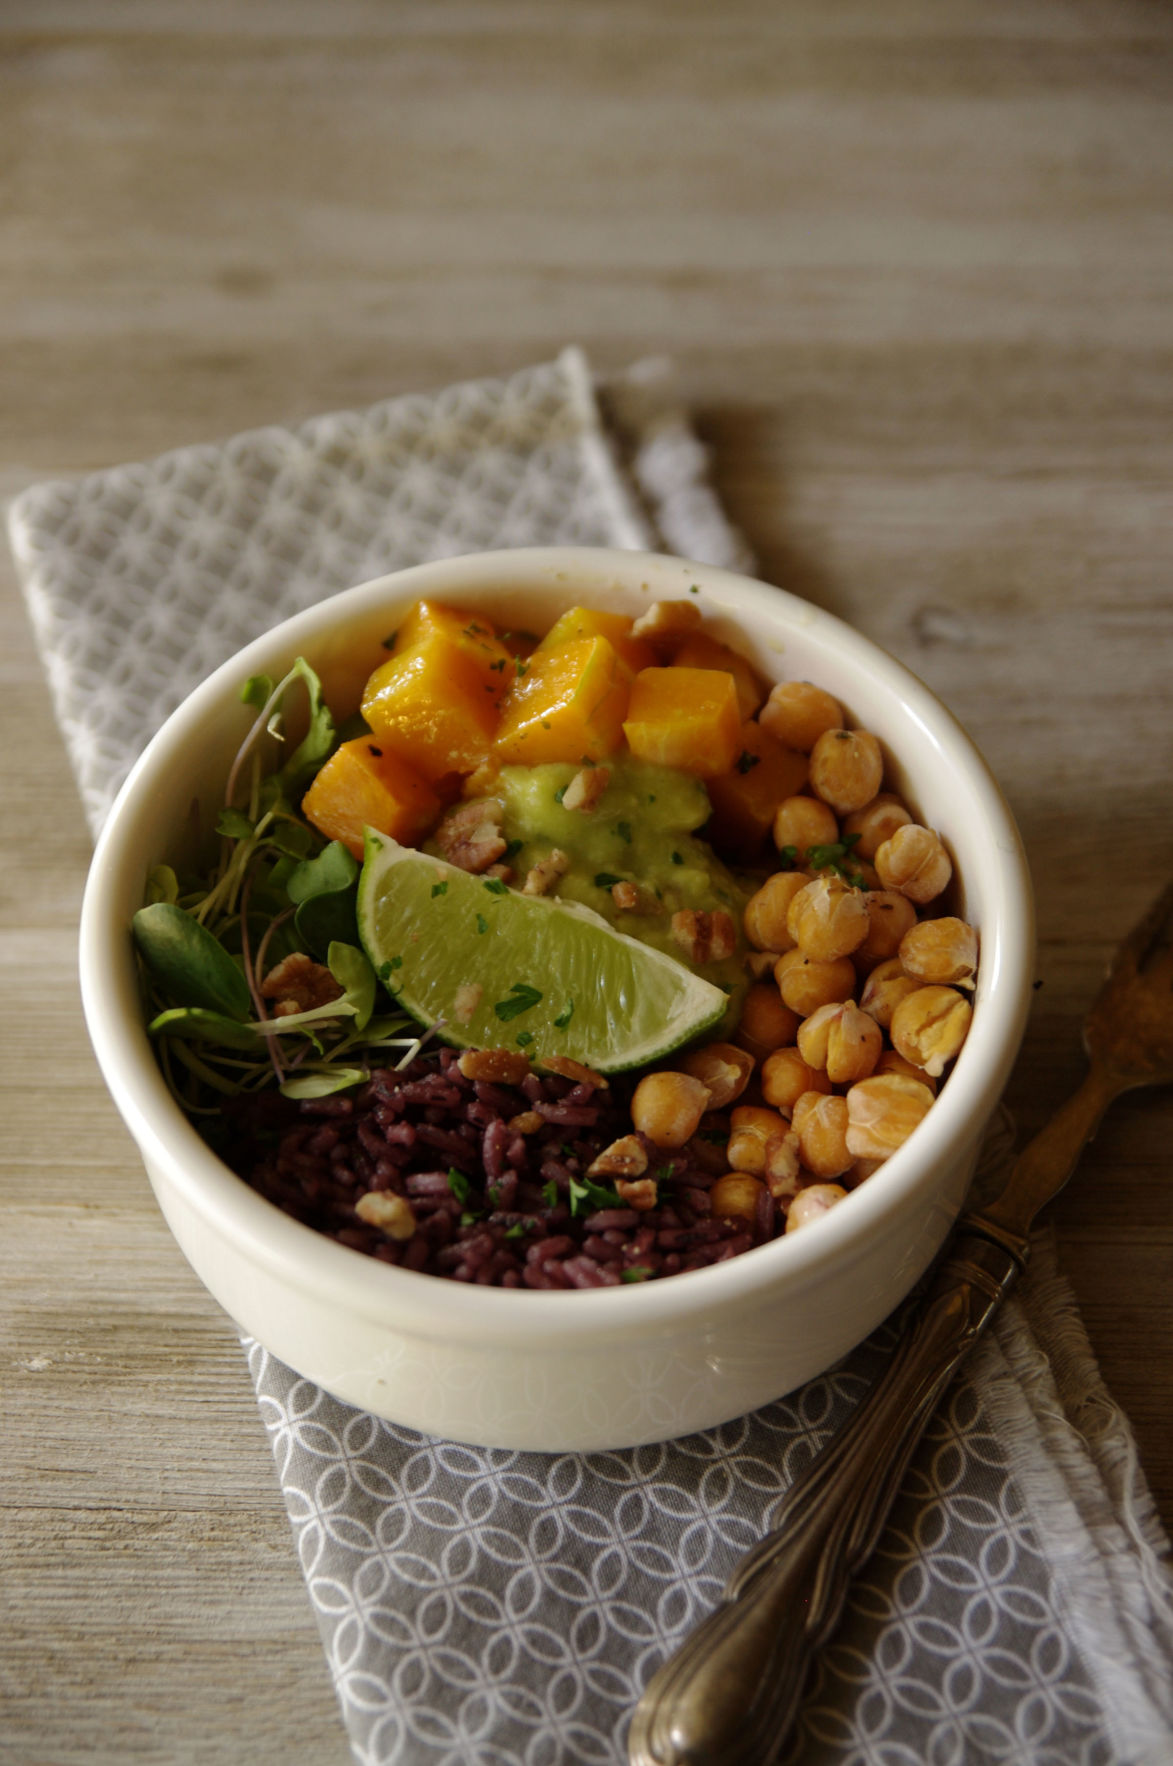 I Eat La.: Recipe for Butternut Squash Bowls | Food/Restaurants ...